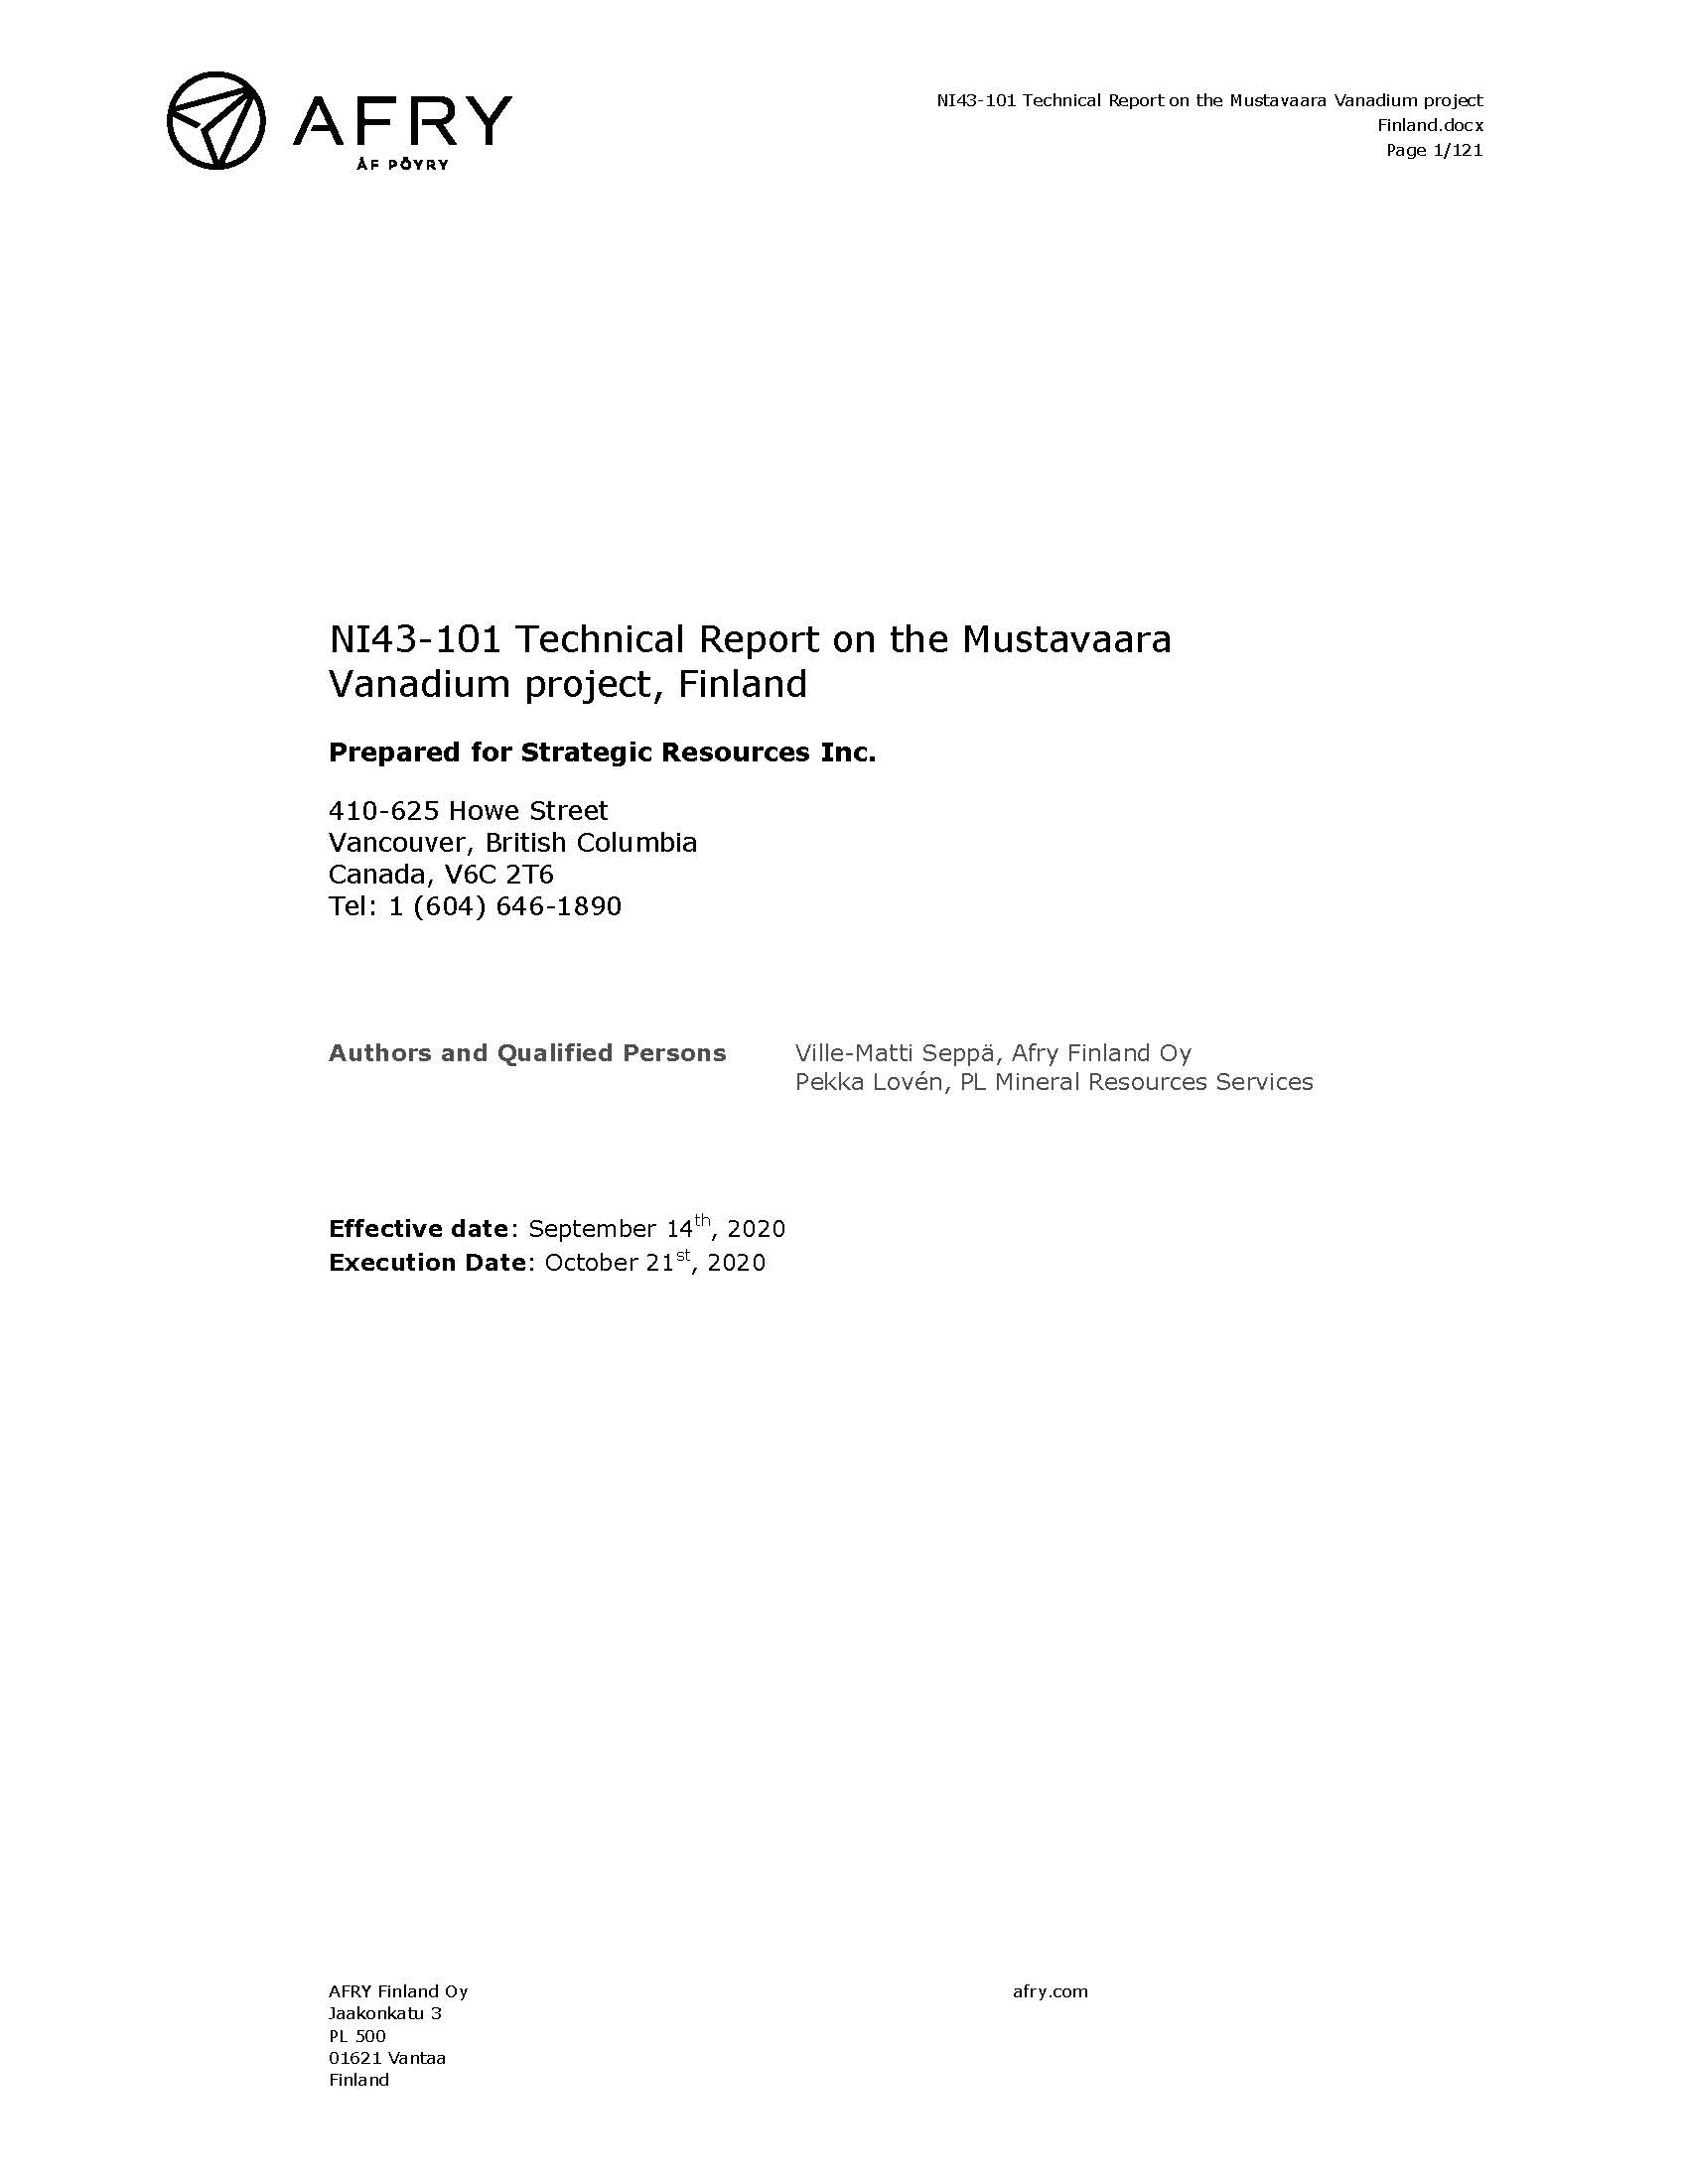 NI43-101 Technical Report - Mustavaara, Finland - Sep 2020